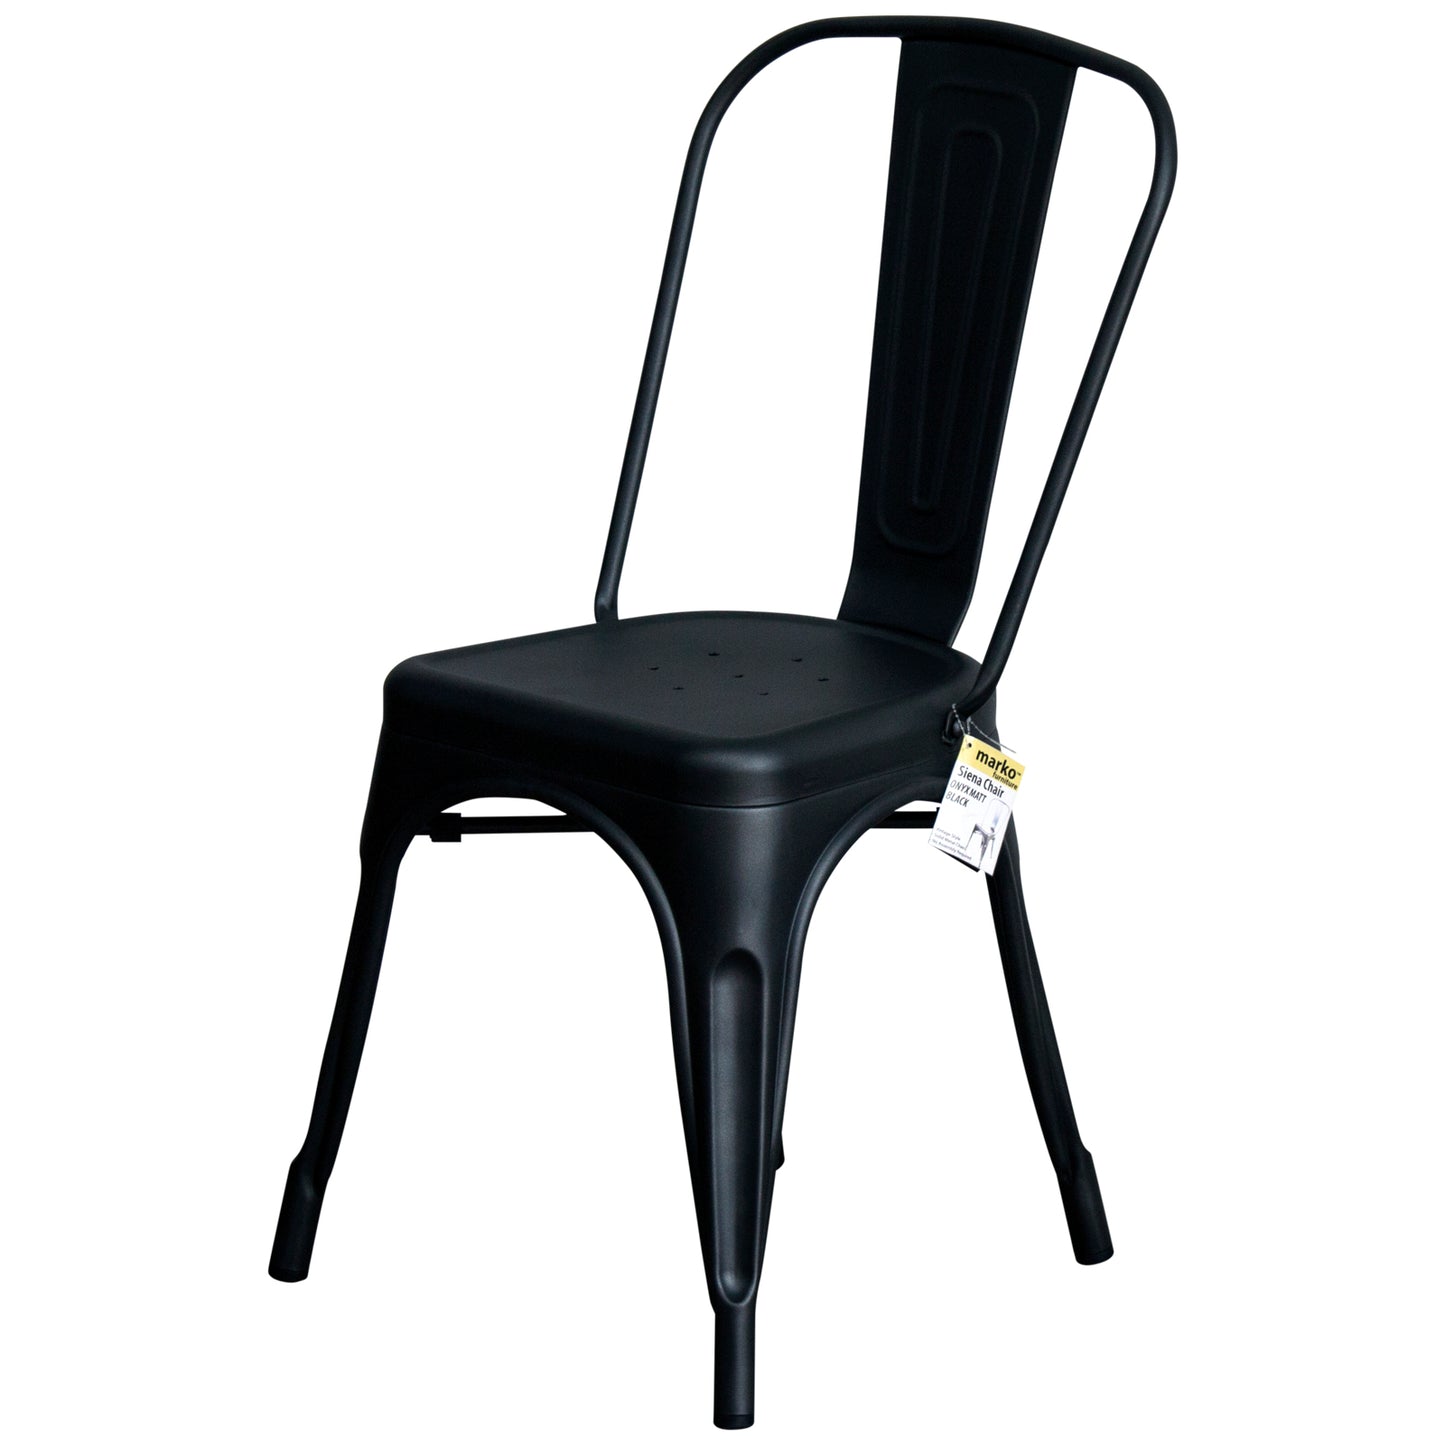 7PC Taranto Table & 6 Siena Chairs Set - Onyx Matt Black